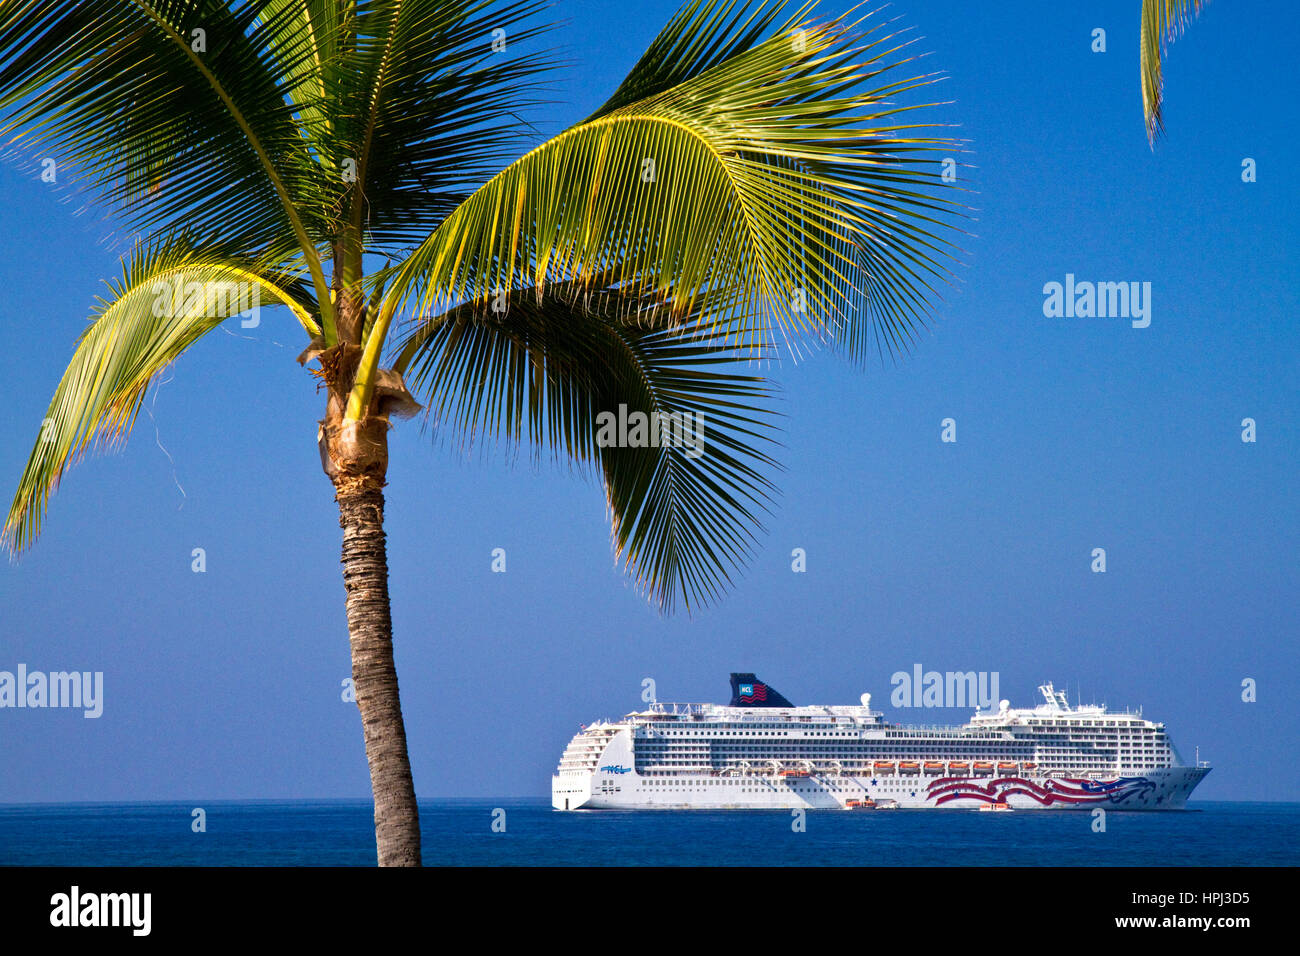 The Pride of America cruise ship at anchor off the coast at Kailua-Kona on the Big Island of Hawaii, USA. Stock Photo